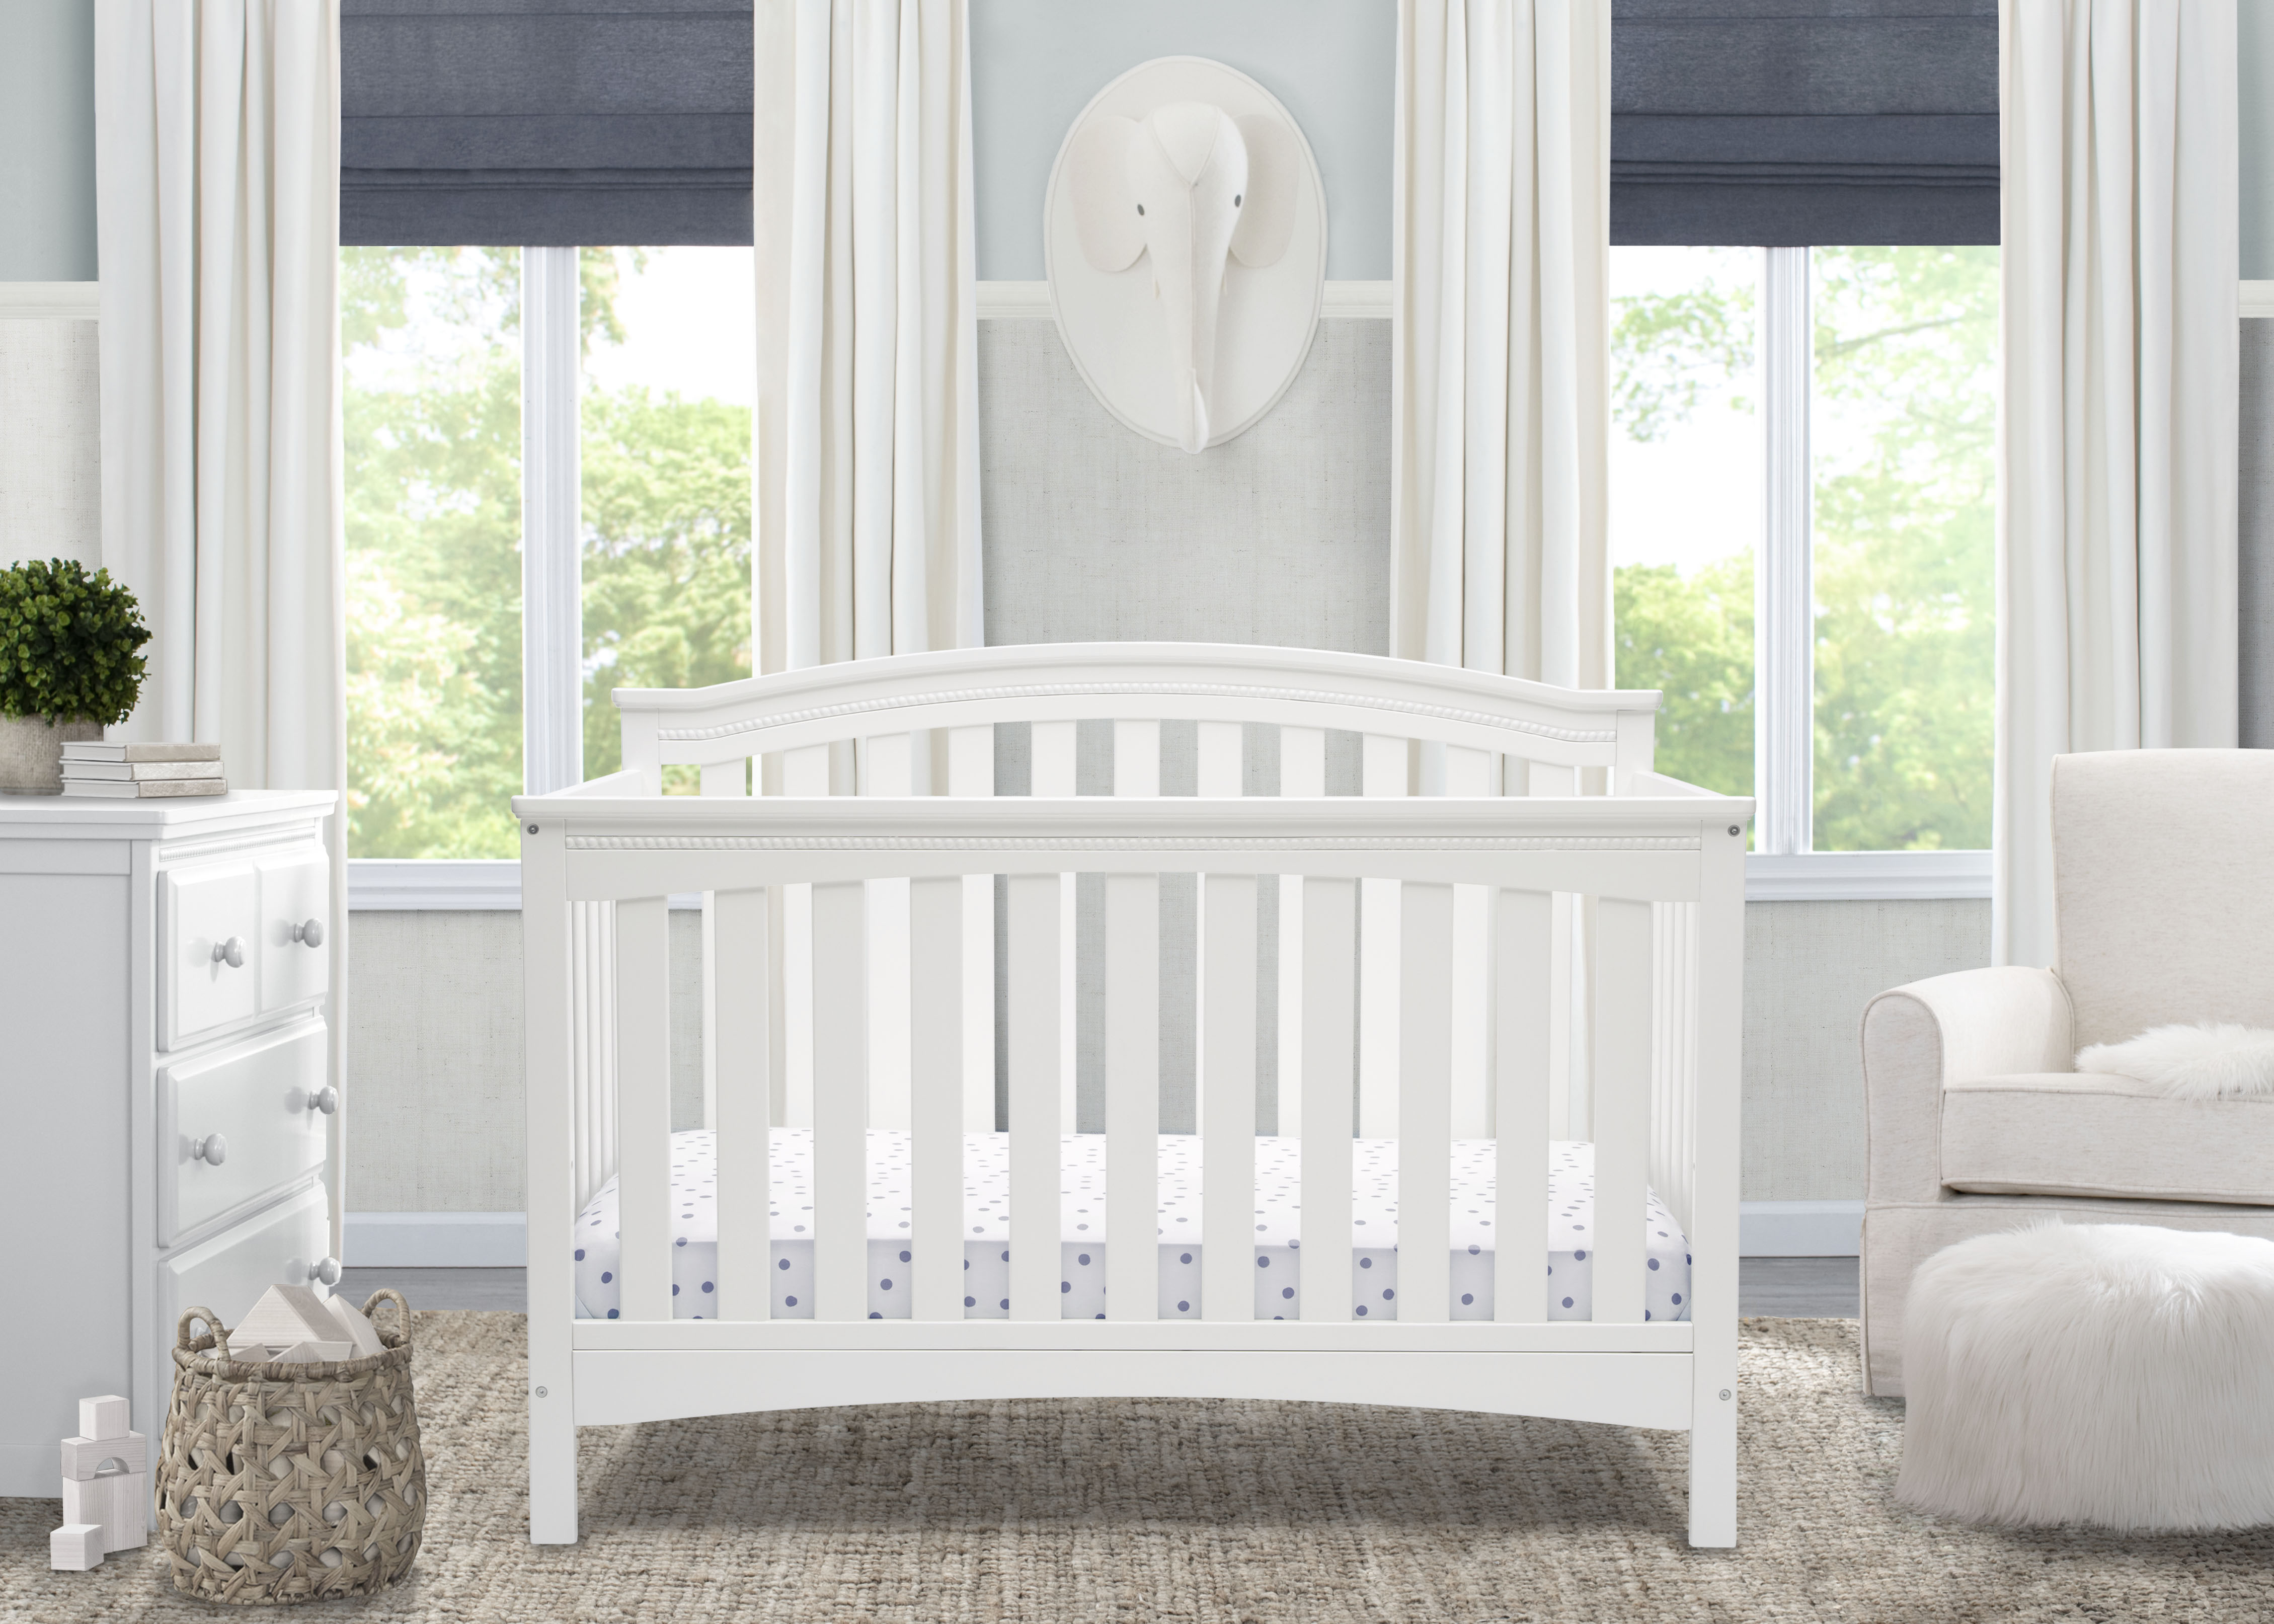 Delta Children Waverly 6-in-1 Convertible Baby Crib, Bianca White - image 4 of 15